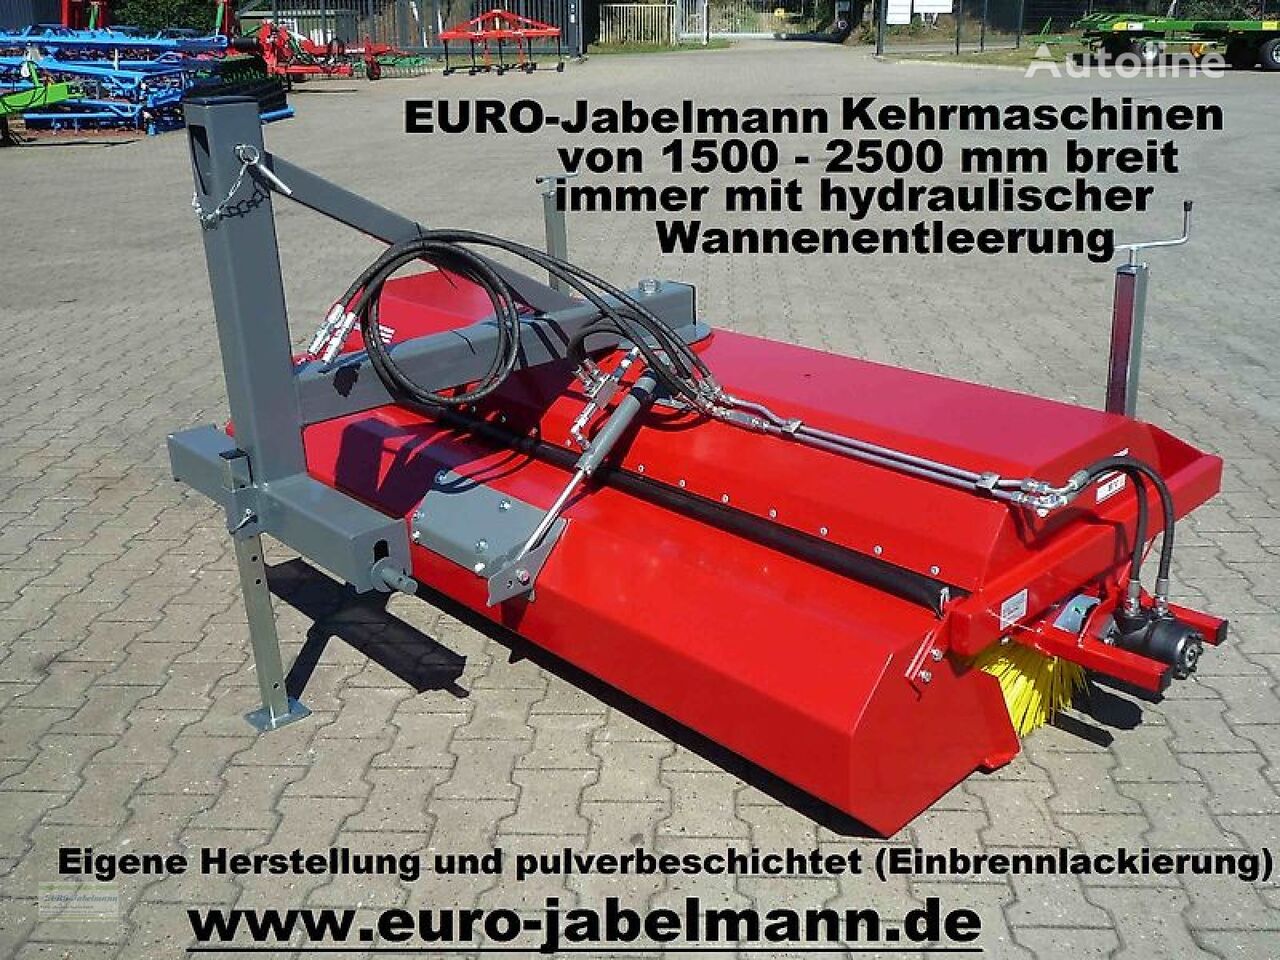 новая щетка коммунальная Euro-Jabelmann Kehrmaschinen, NEU, Breiten 1500 - 2500 mm, eigene Herstellung